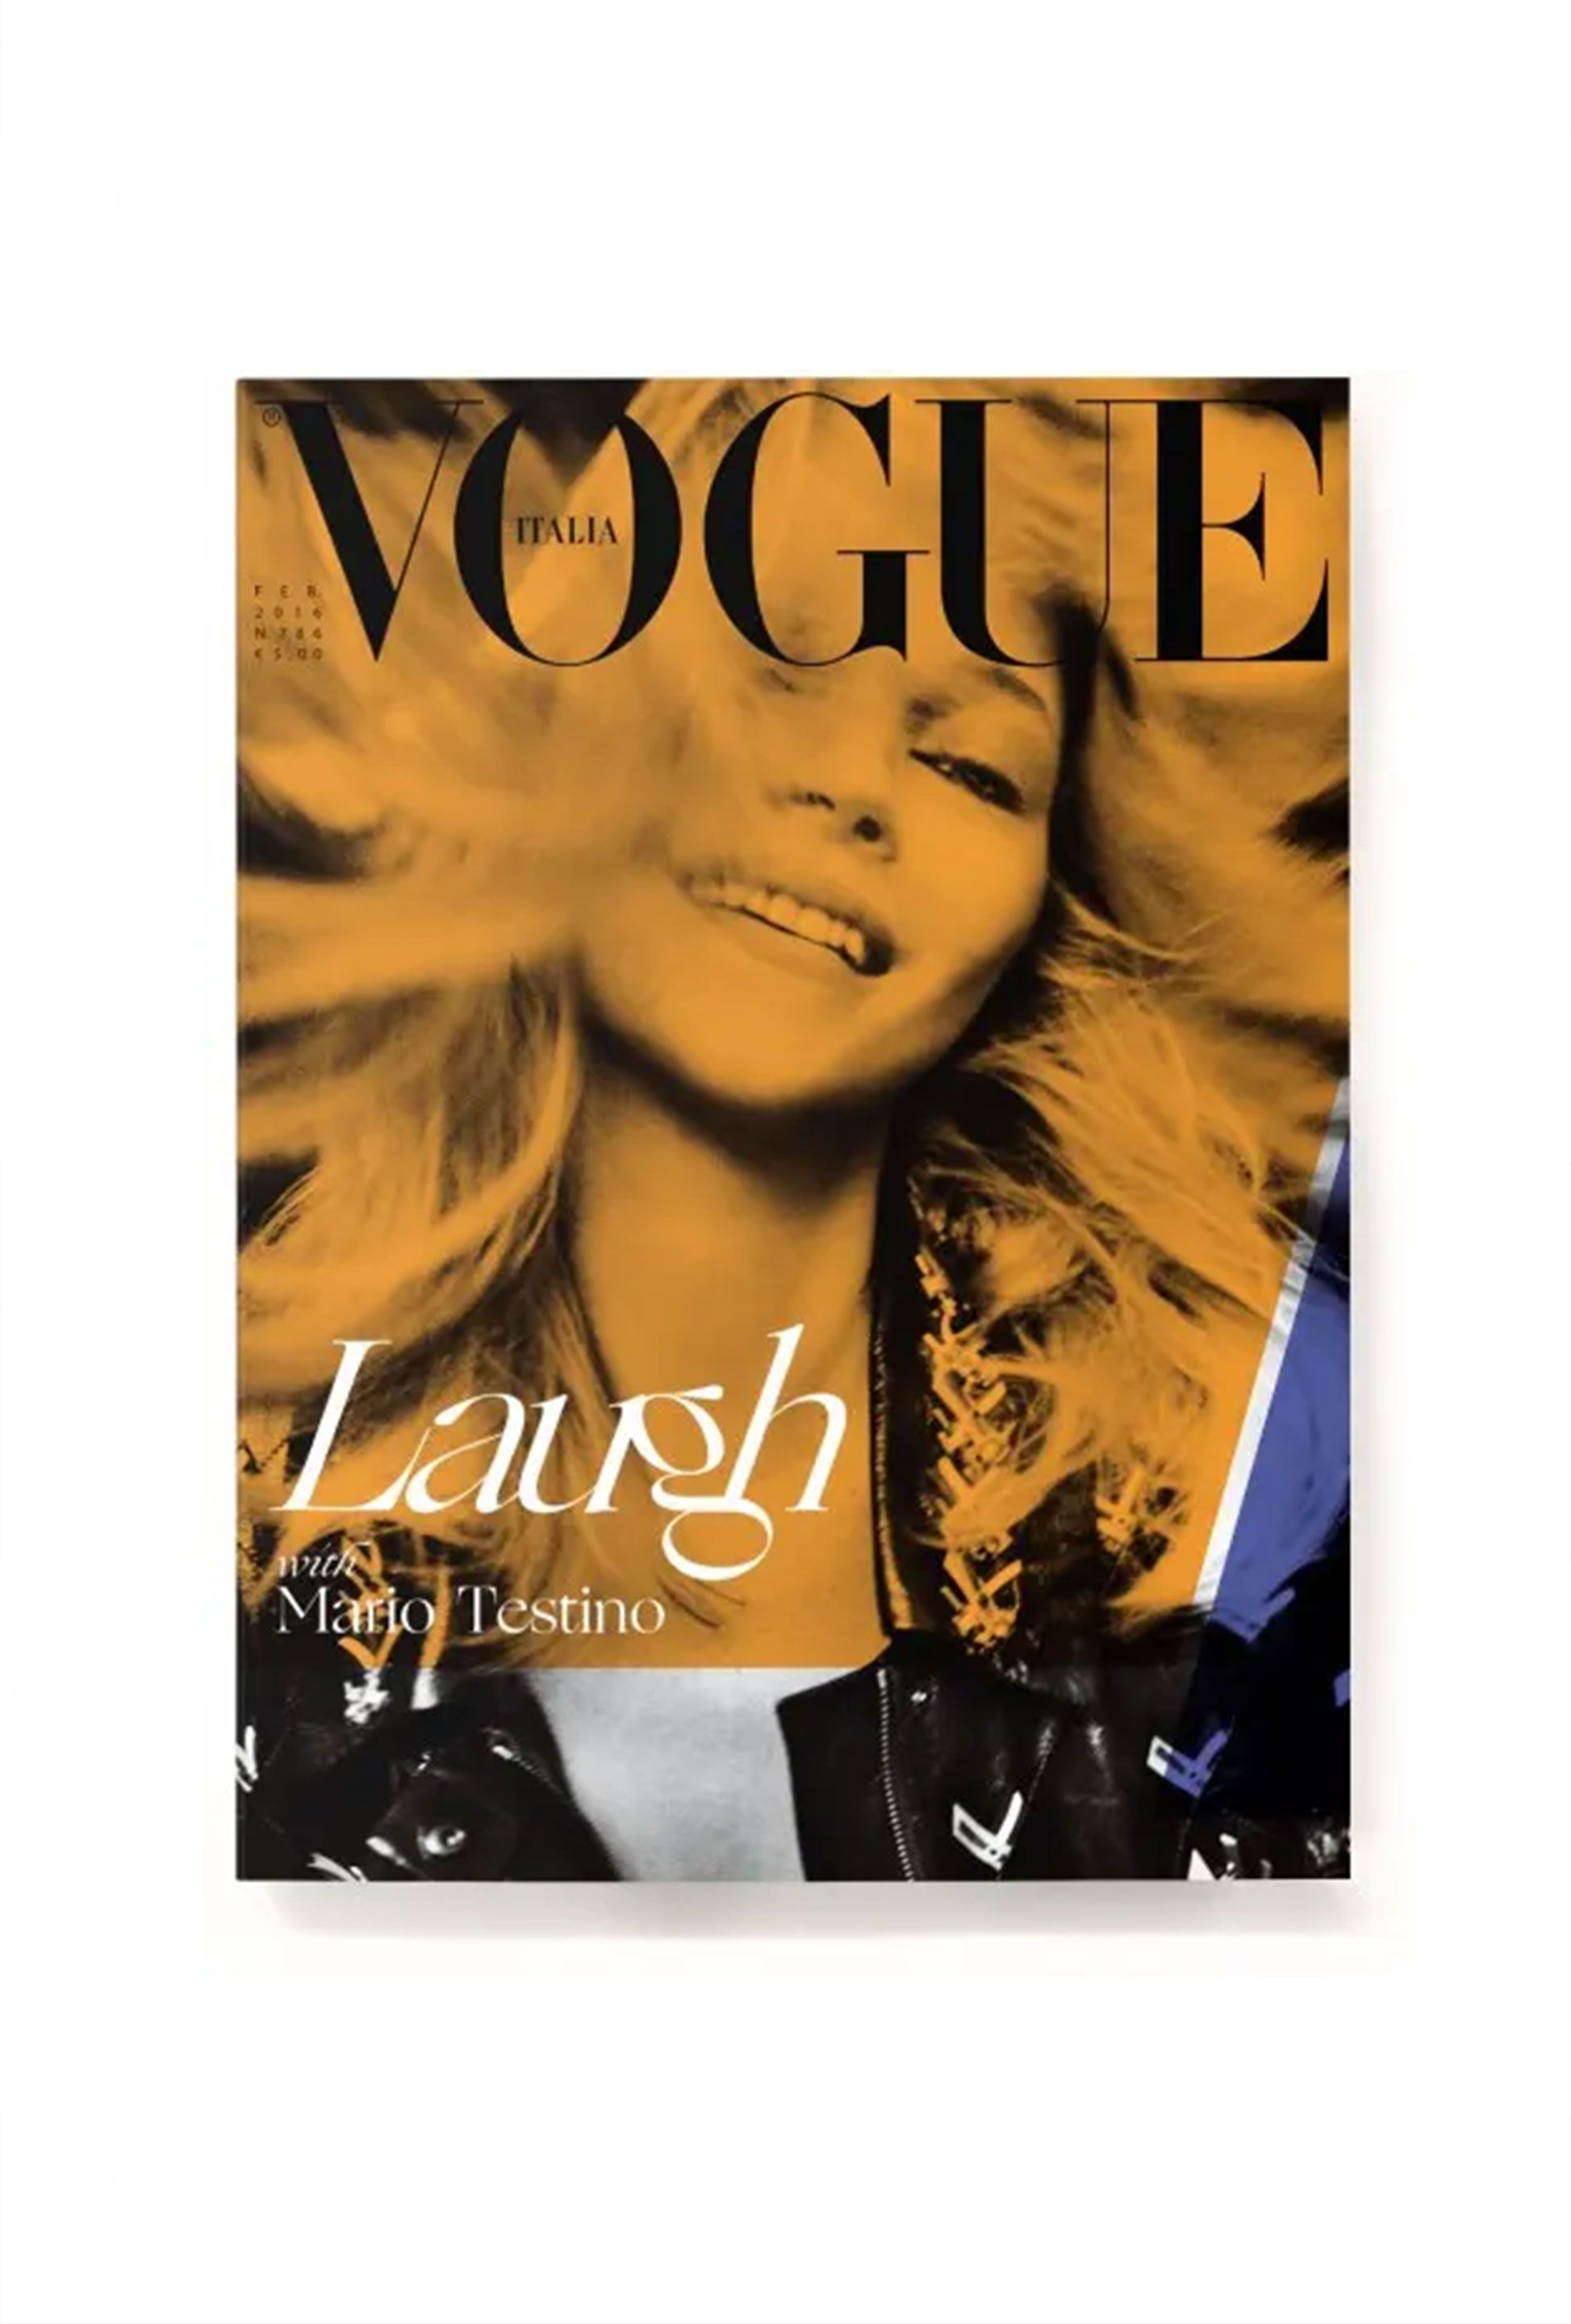 Vogue Italia Special Edition